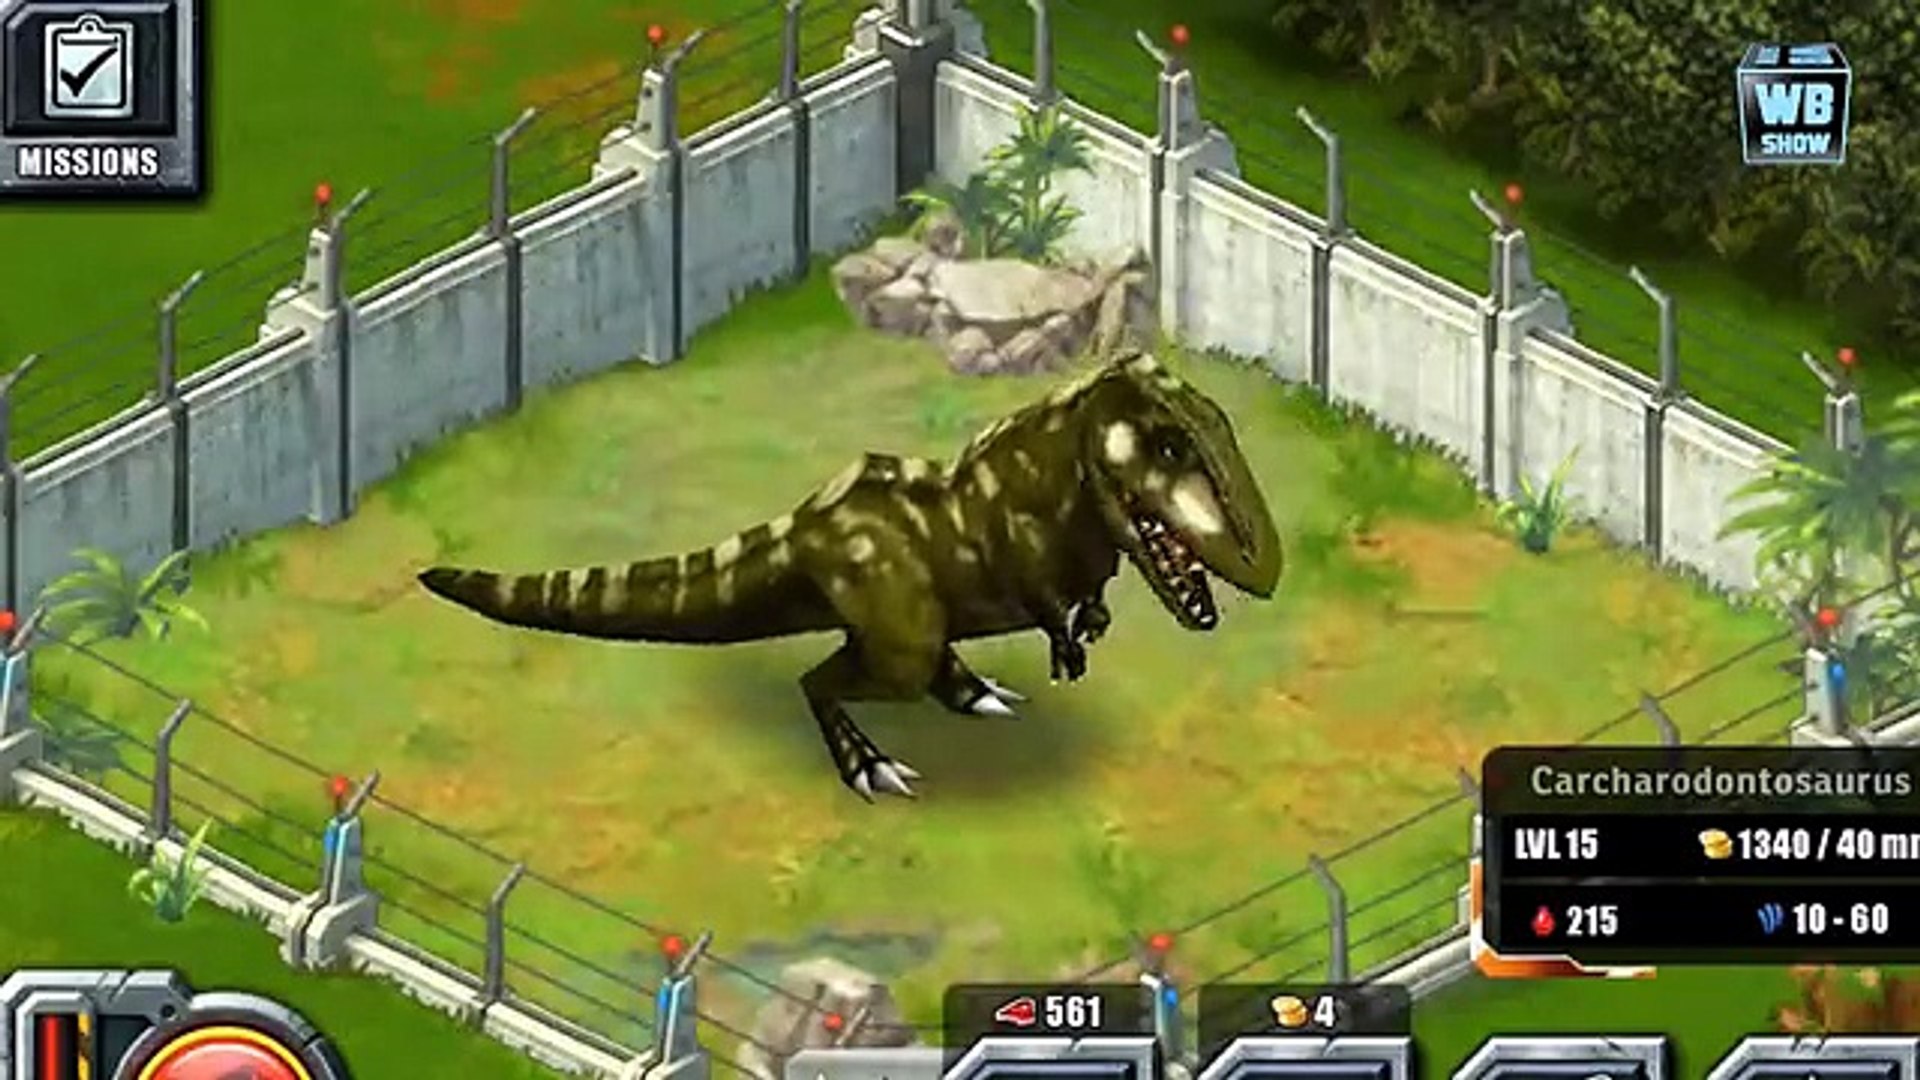 Jurassic Park Builder - Carcharodontosaurus [Jurassic Park]